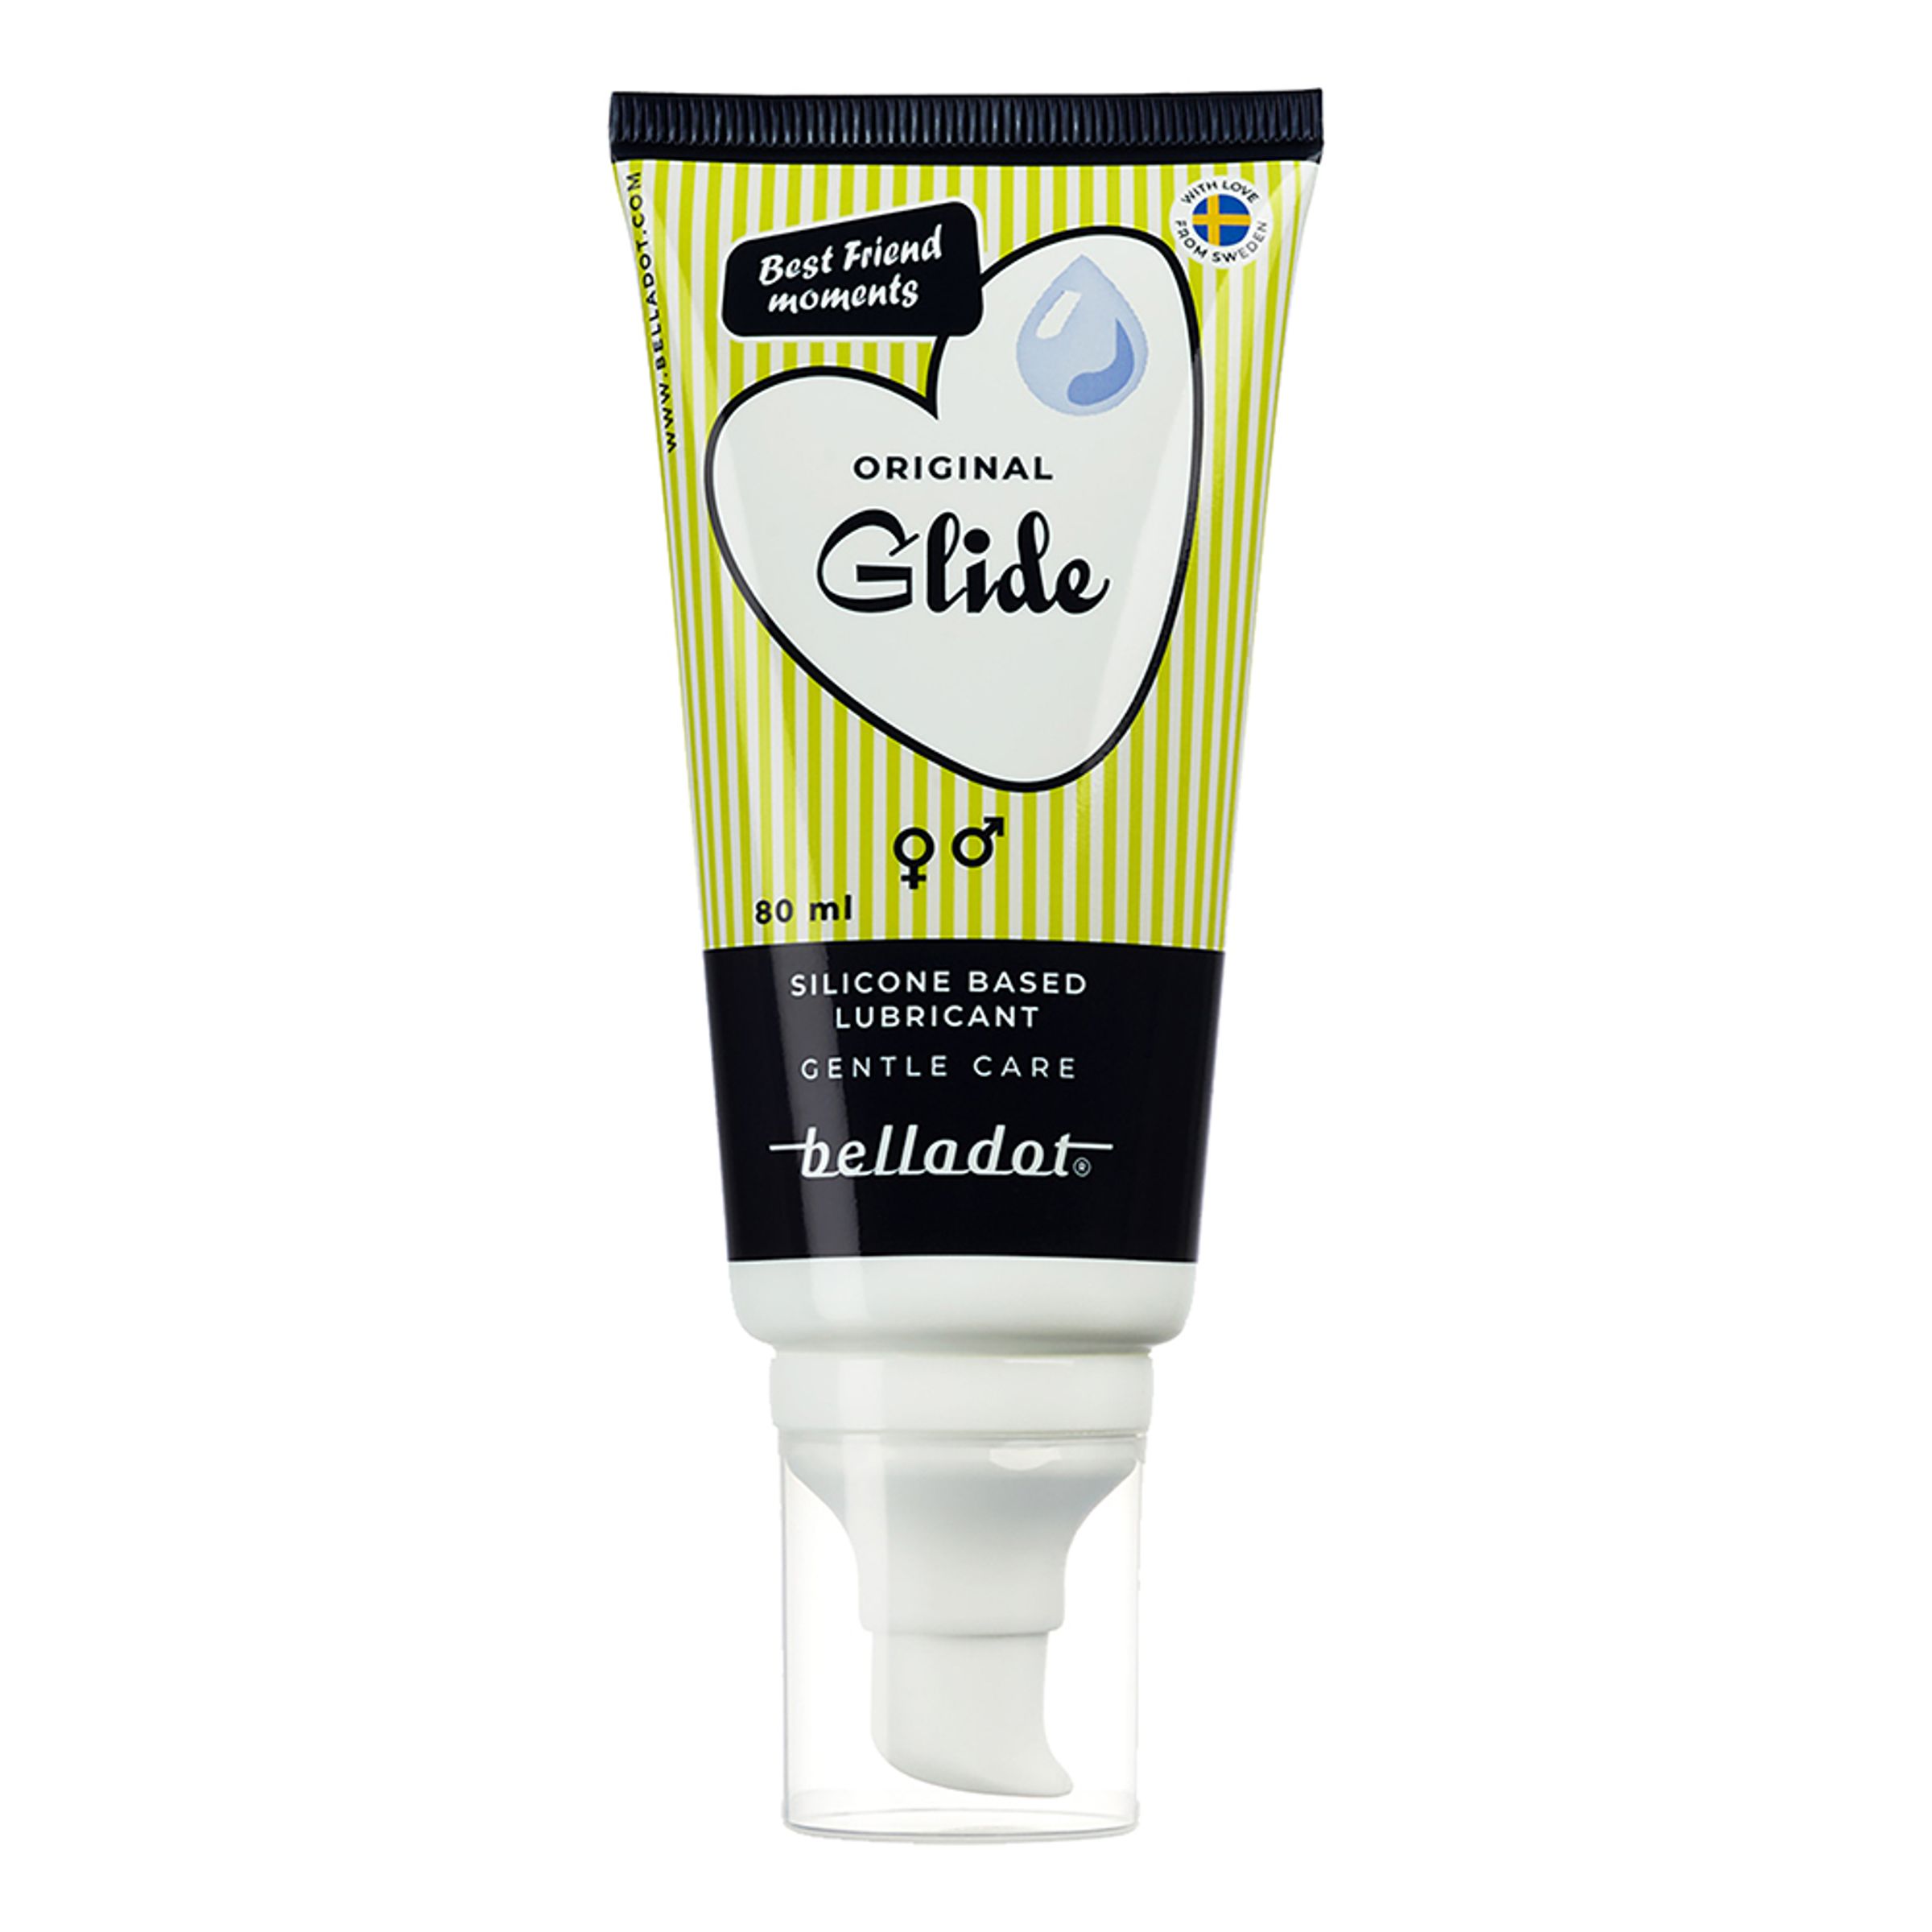 Belladot Lubricant Silicone Based Glidmedel - 80 ml